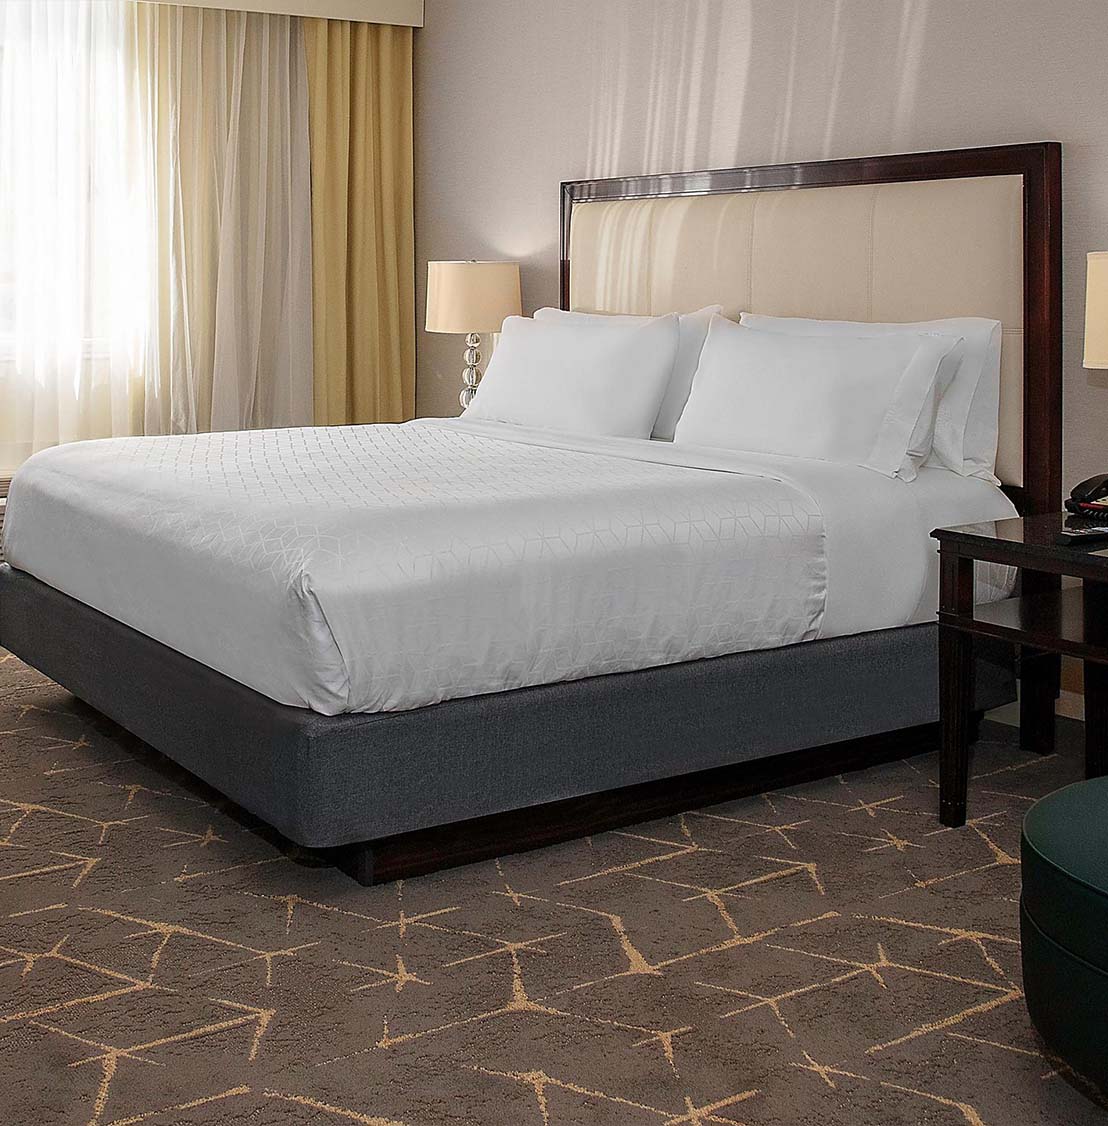 Holiday Inn Peabody bedroom